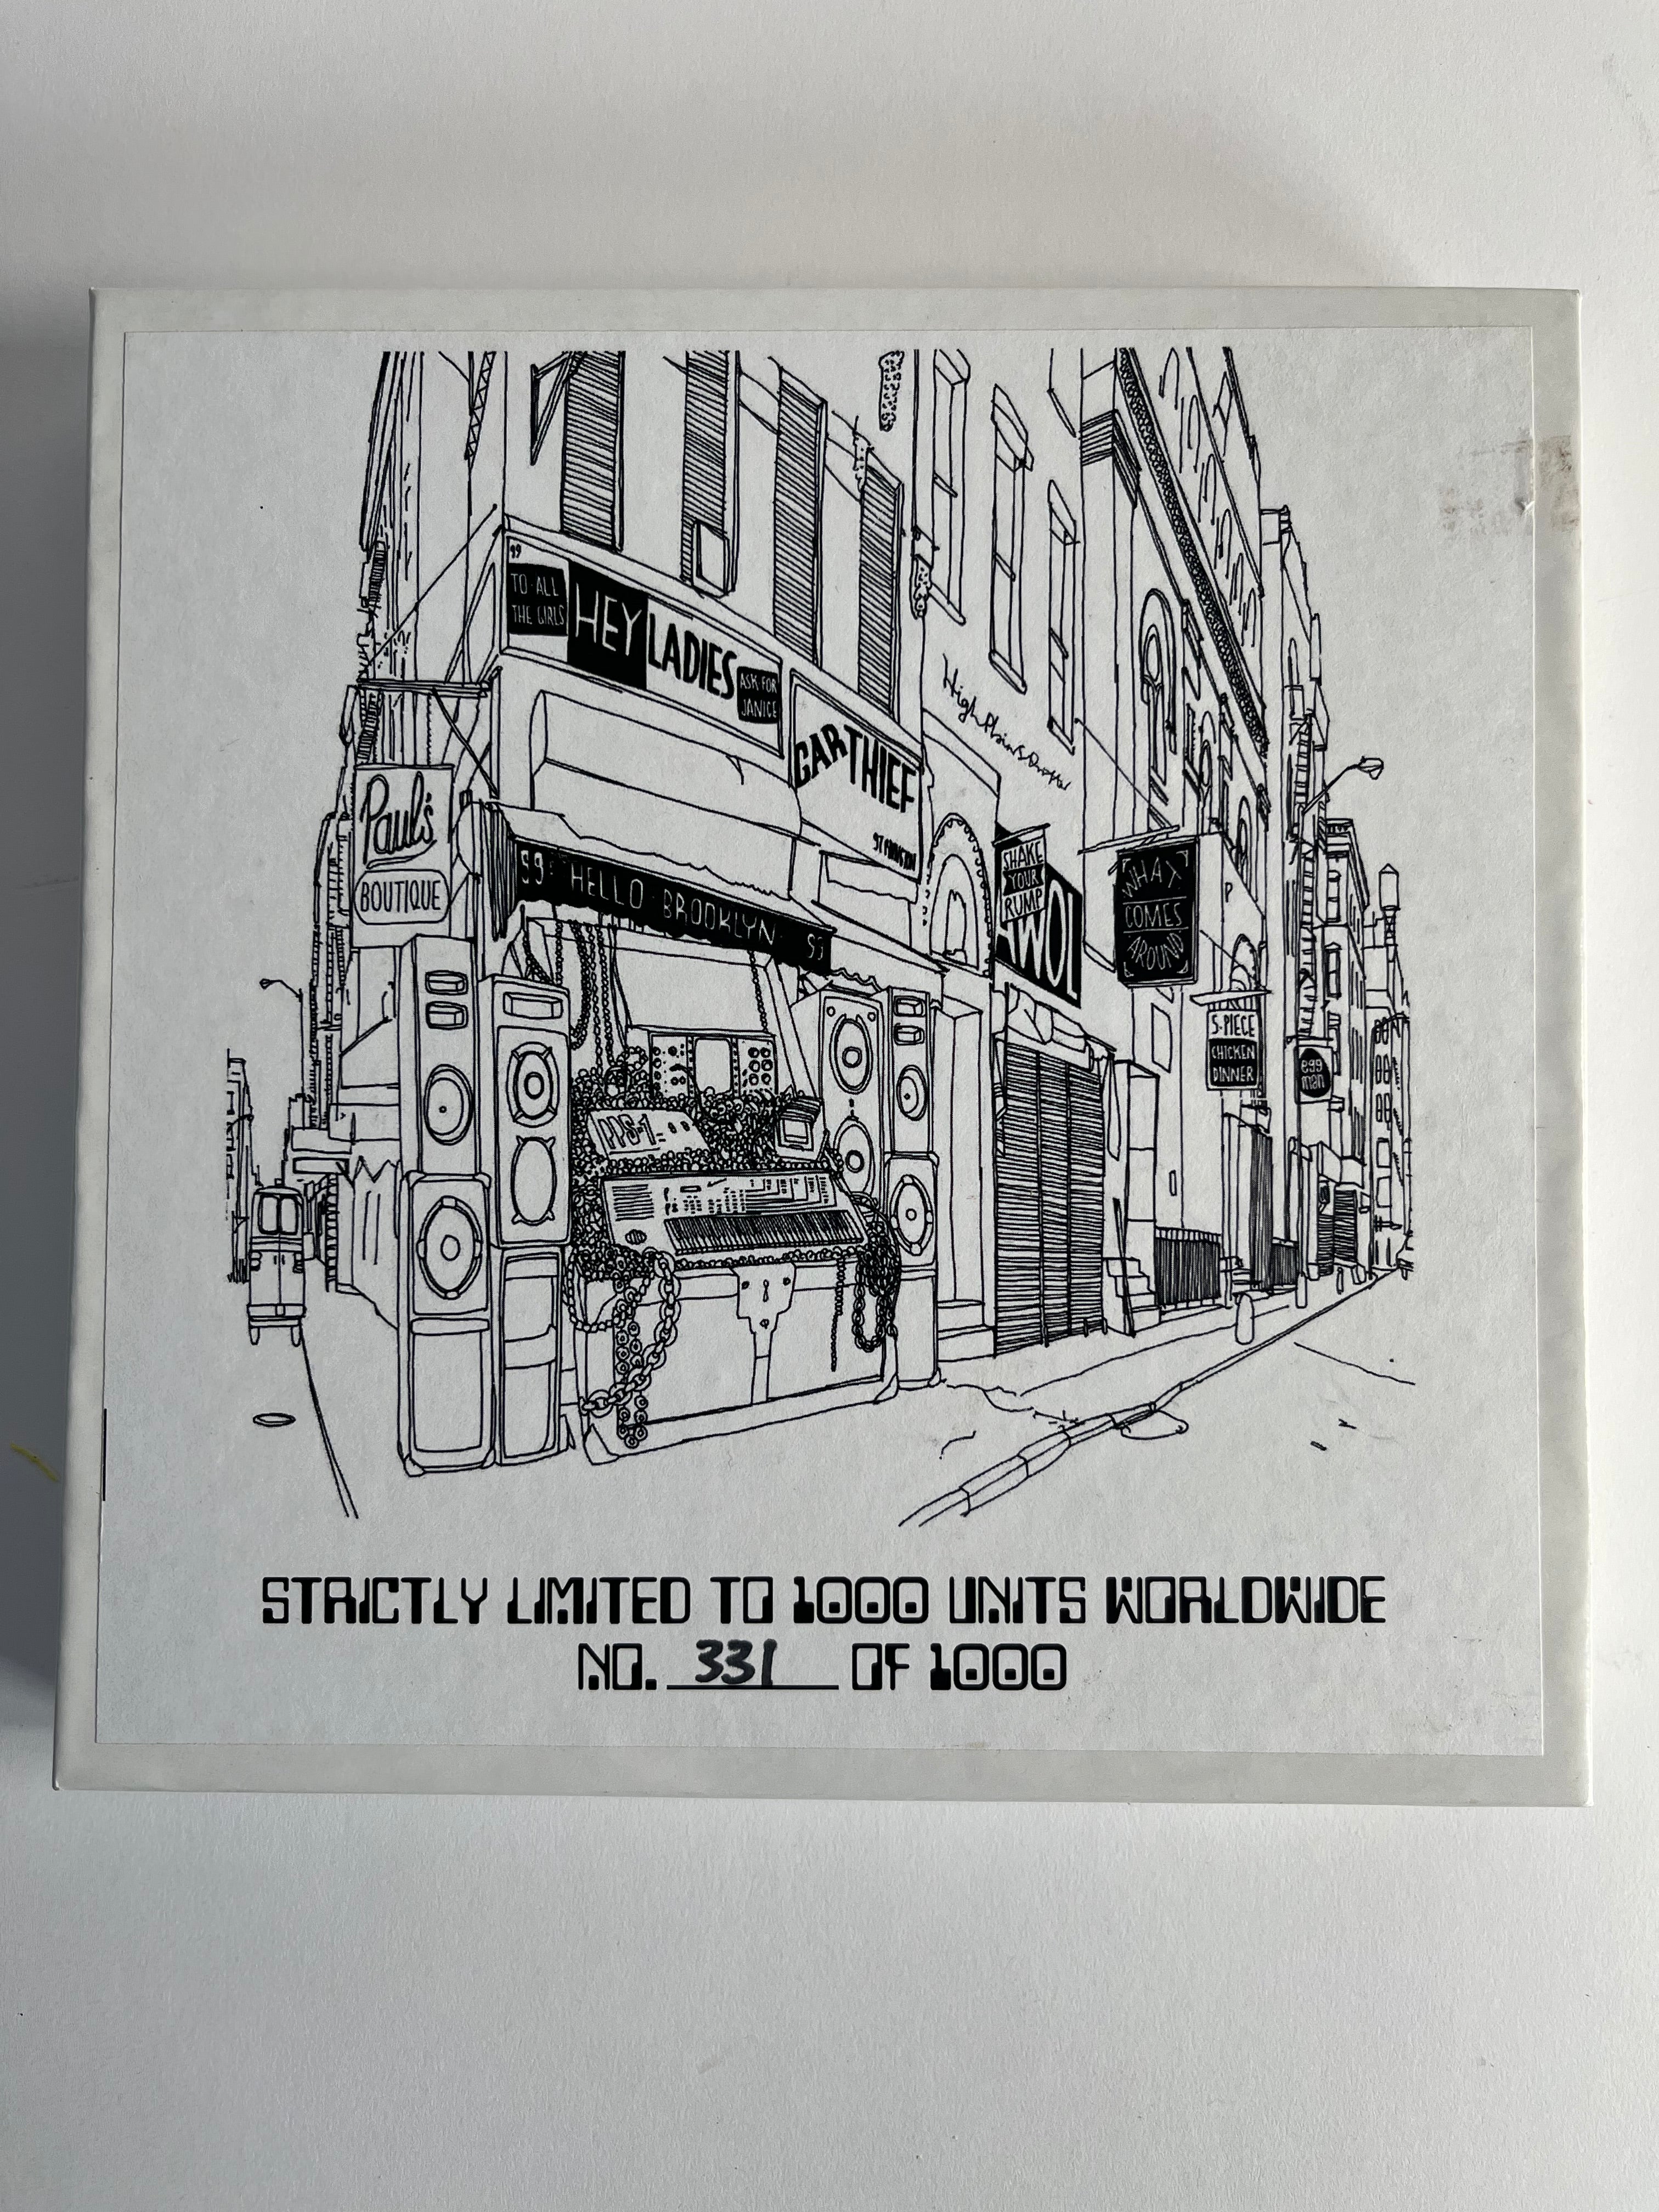 Beastie Boys - Paul's Boutique Unofficial LImited Colored Vinyl 7" Box Set